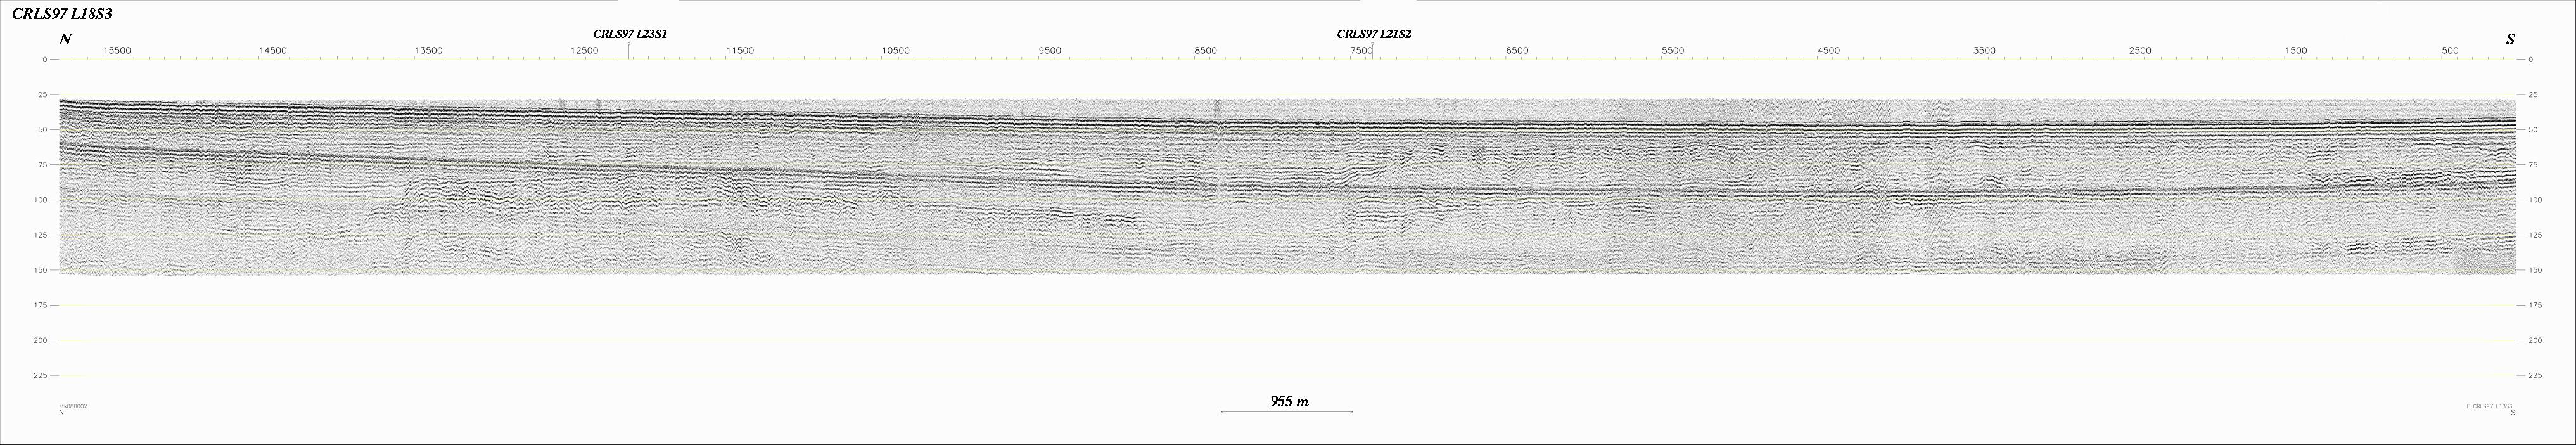 Seismic Reflection Profile Line No.: L18s3 (521866 bytes)